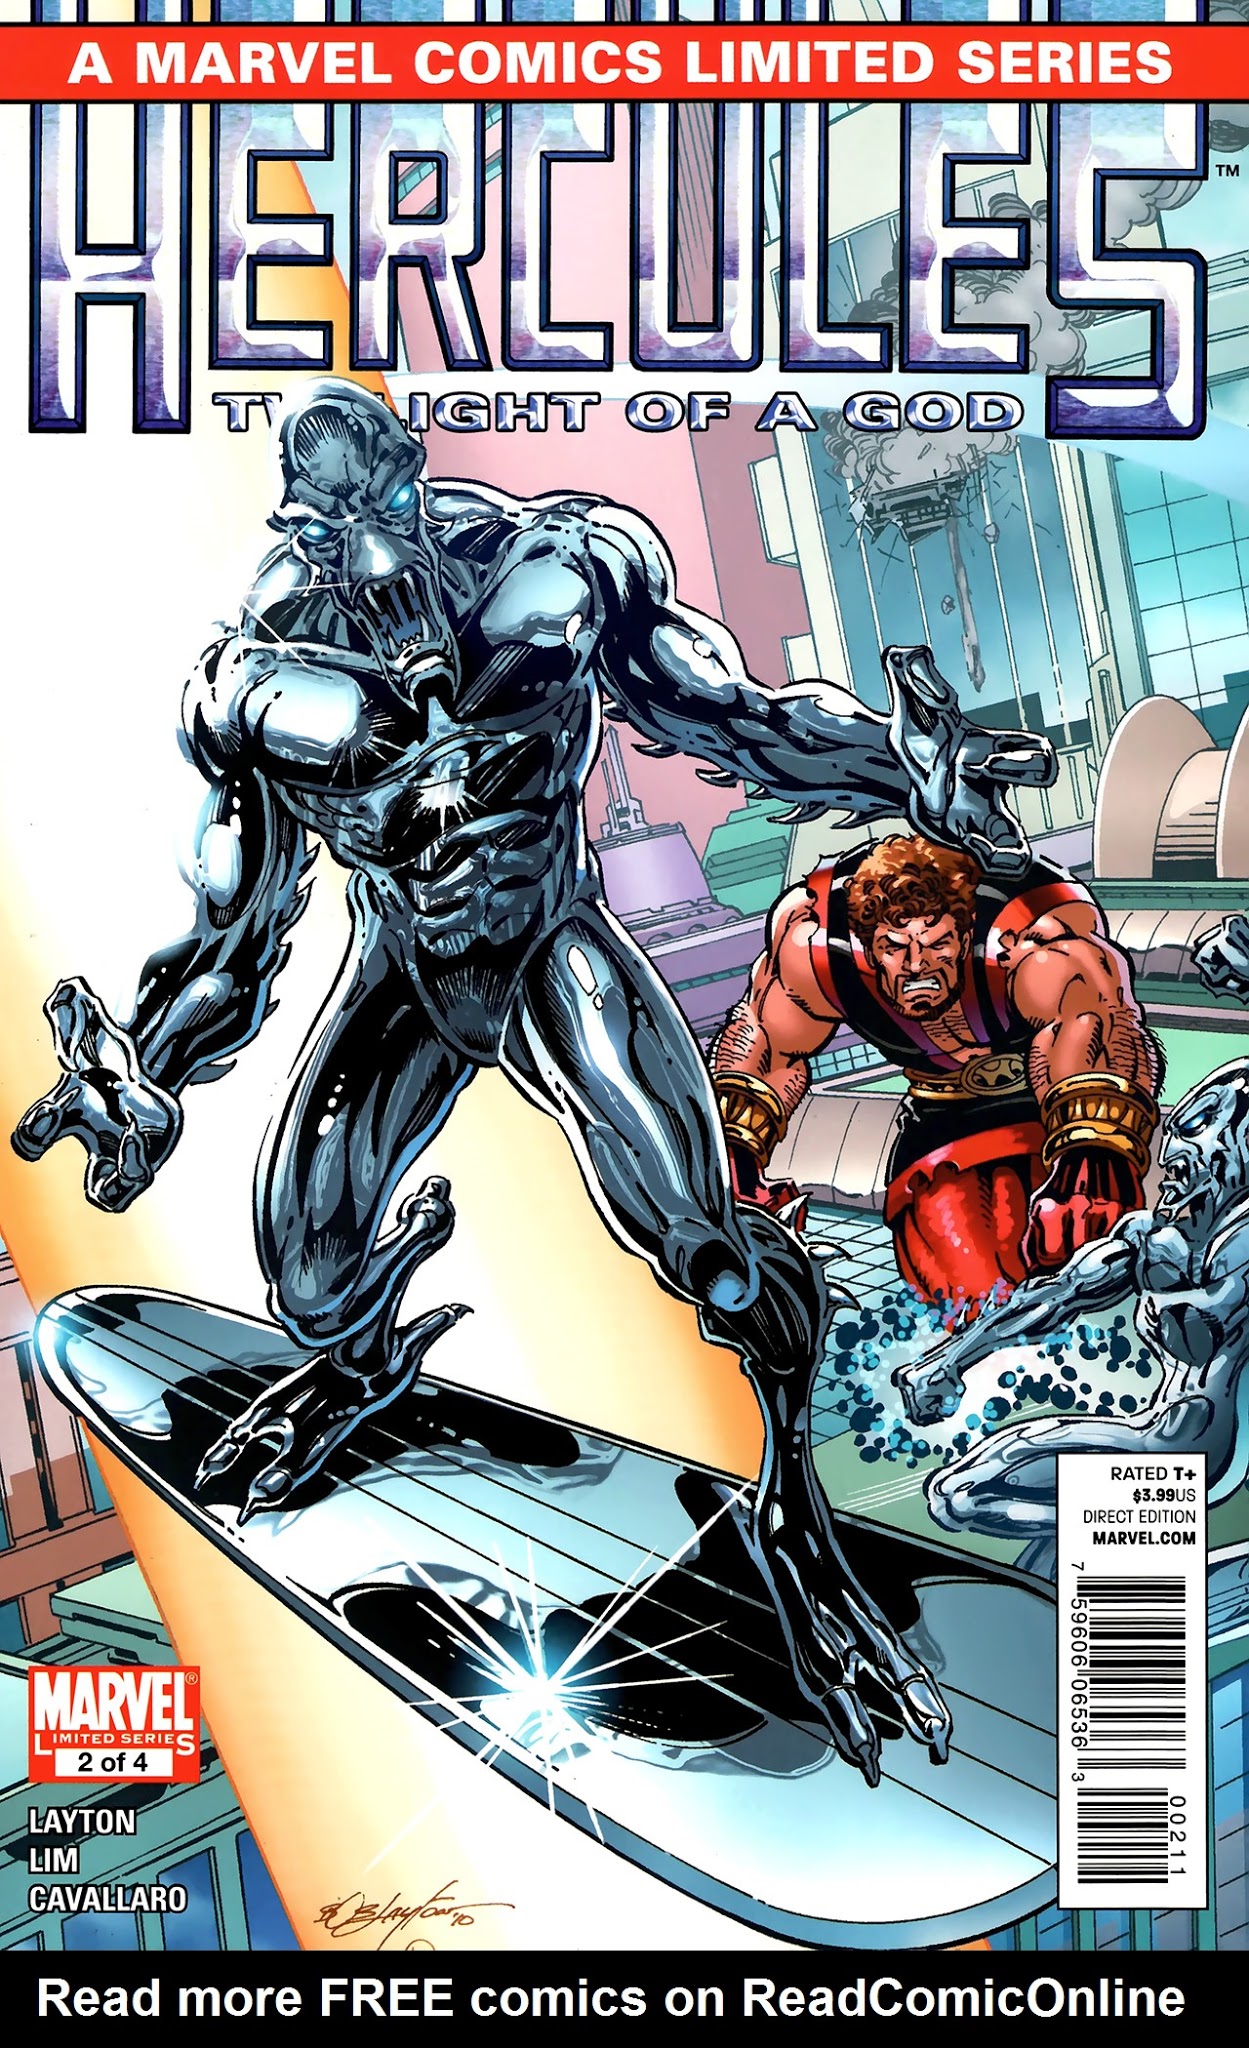 Read online Hercules: Twilight of a God comic -  Issue #2 - 1